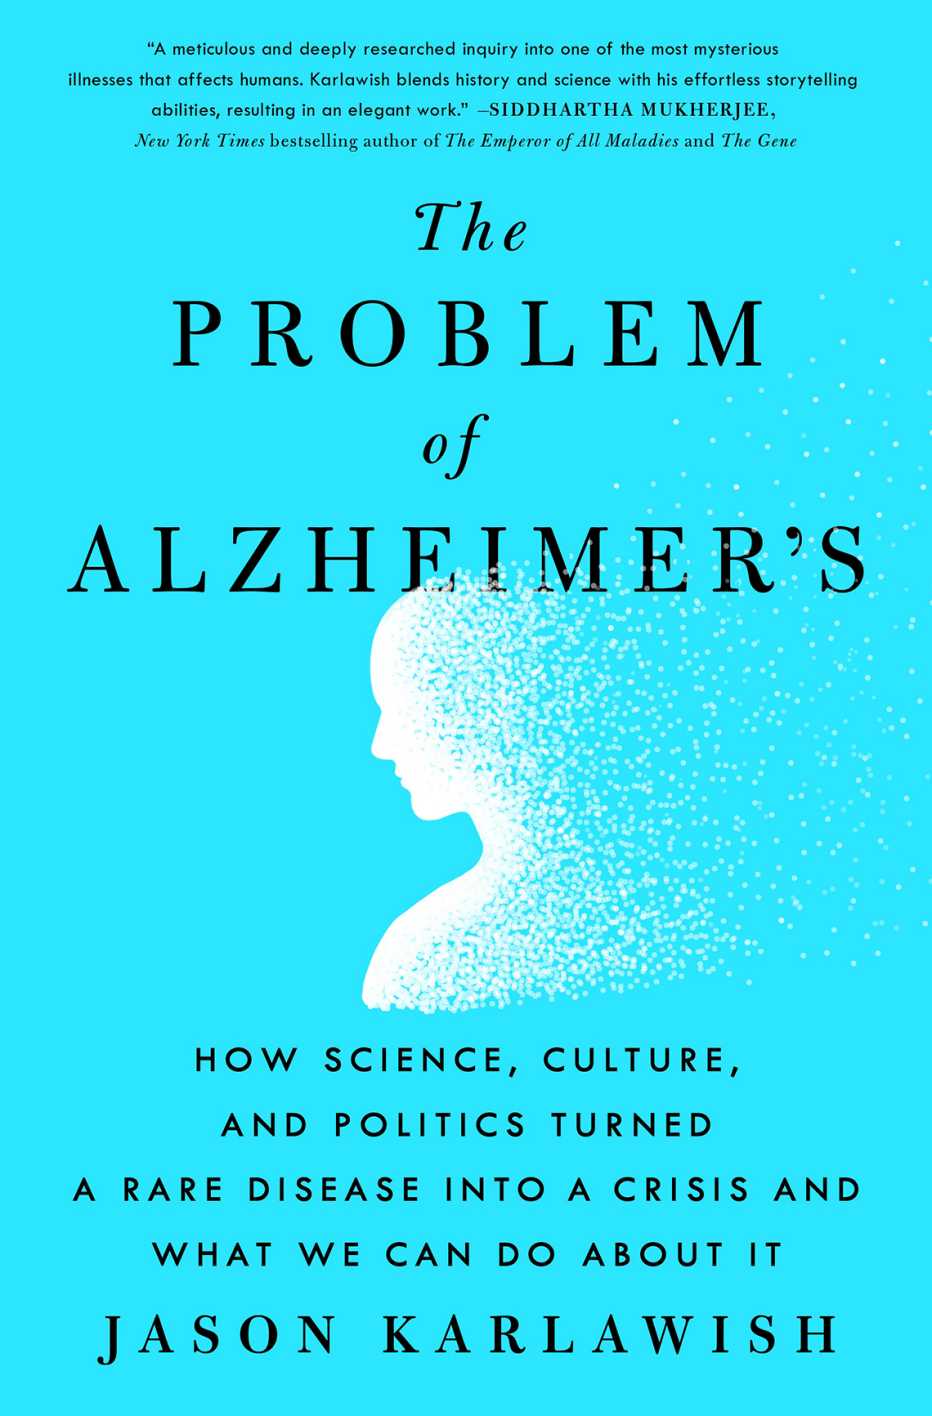 Portada del libro "The Problem of Alzheimer’s" por Jason Karlawish.